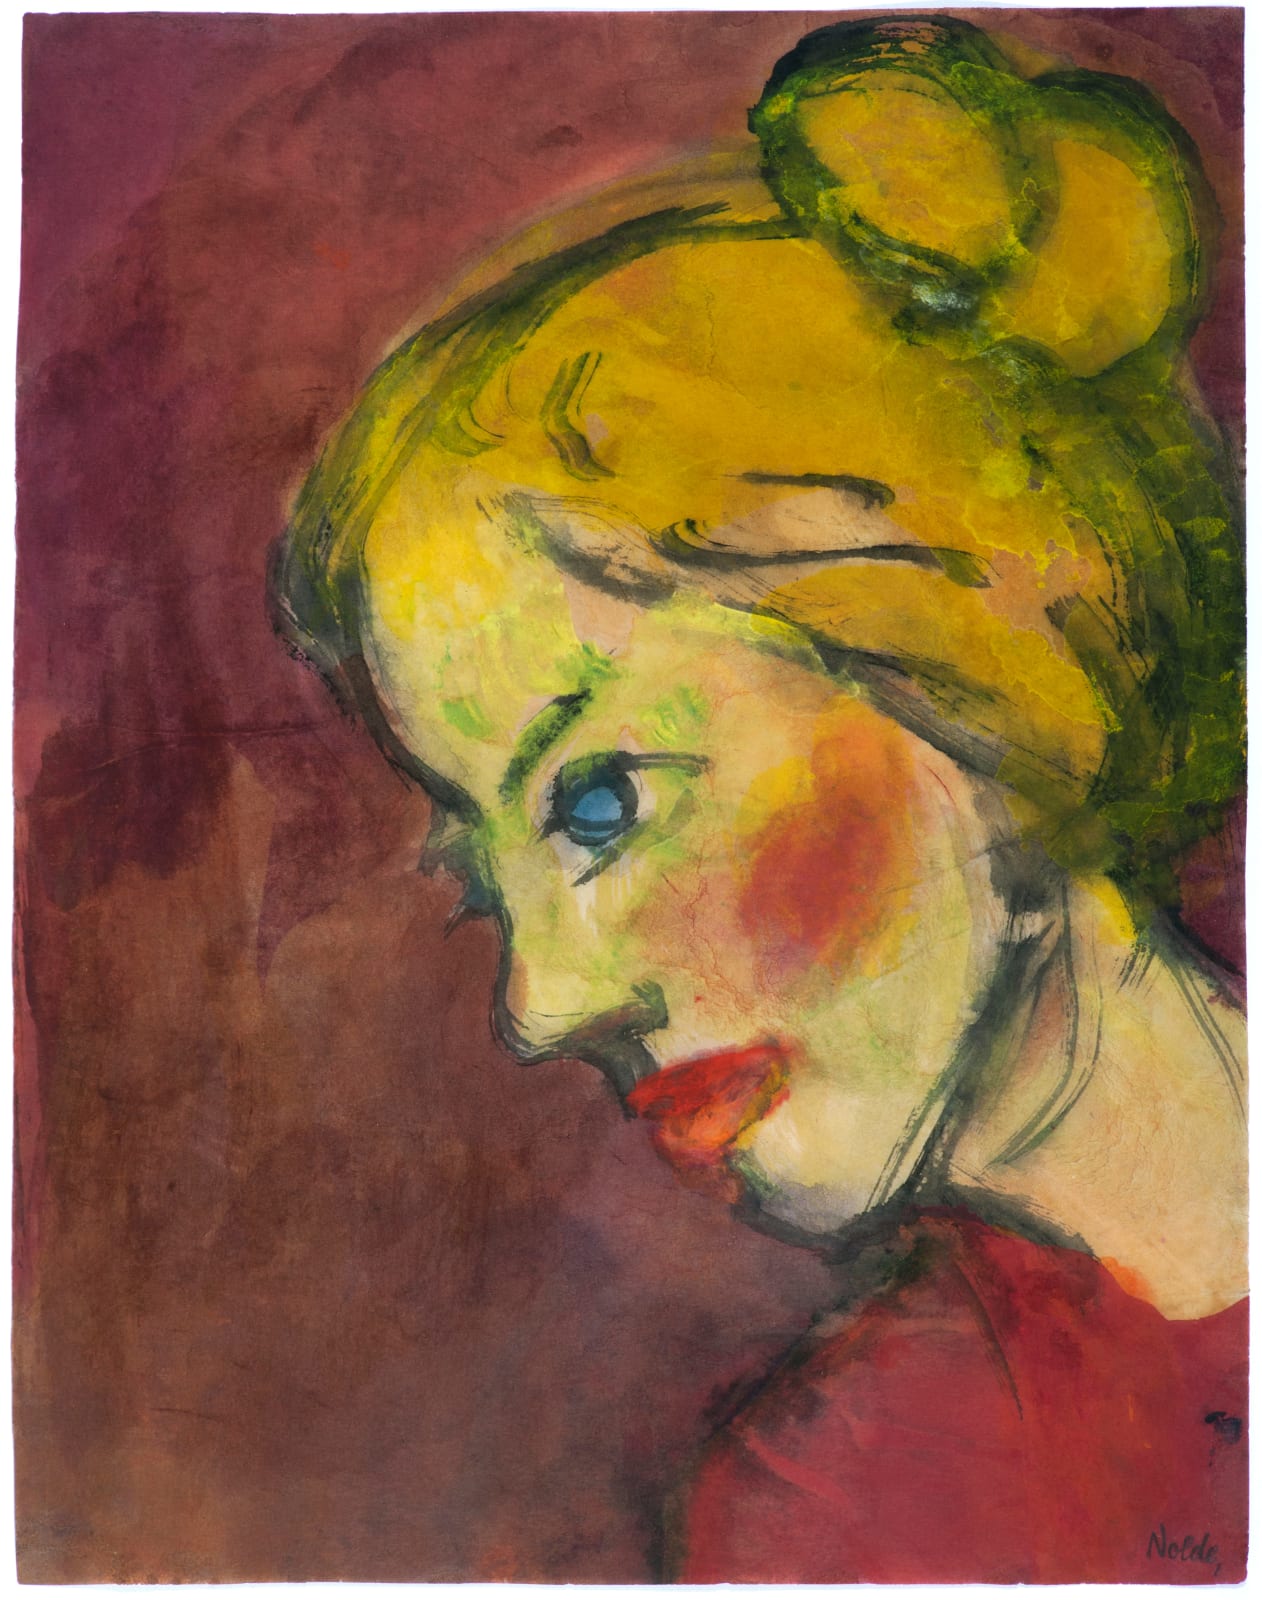 EMIL NOLDE, Mädchenbildnis, 1920/25